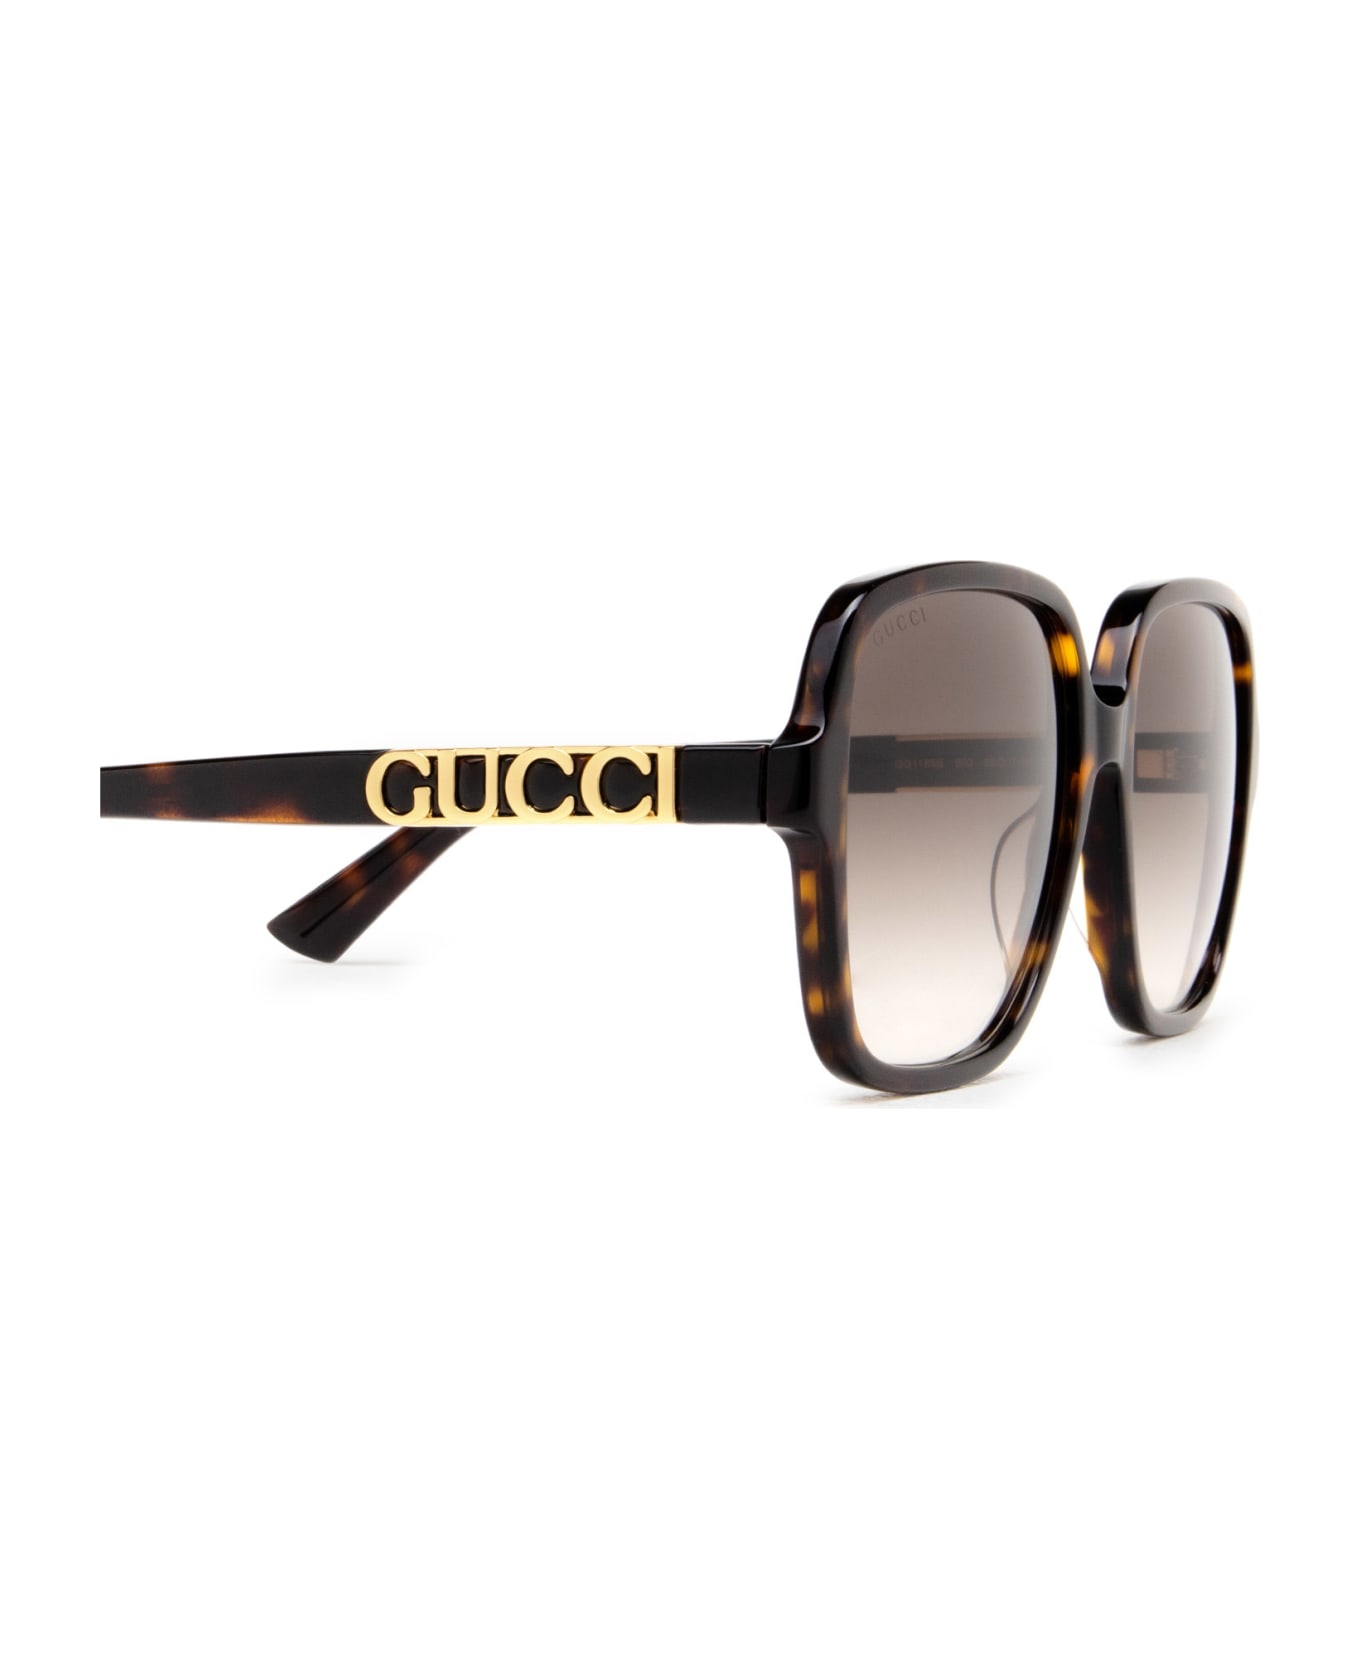 Gucci Eyewear Gg1189s Havana Sunglasses - Havana サングラス